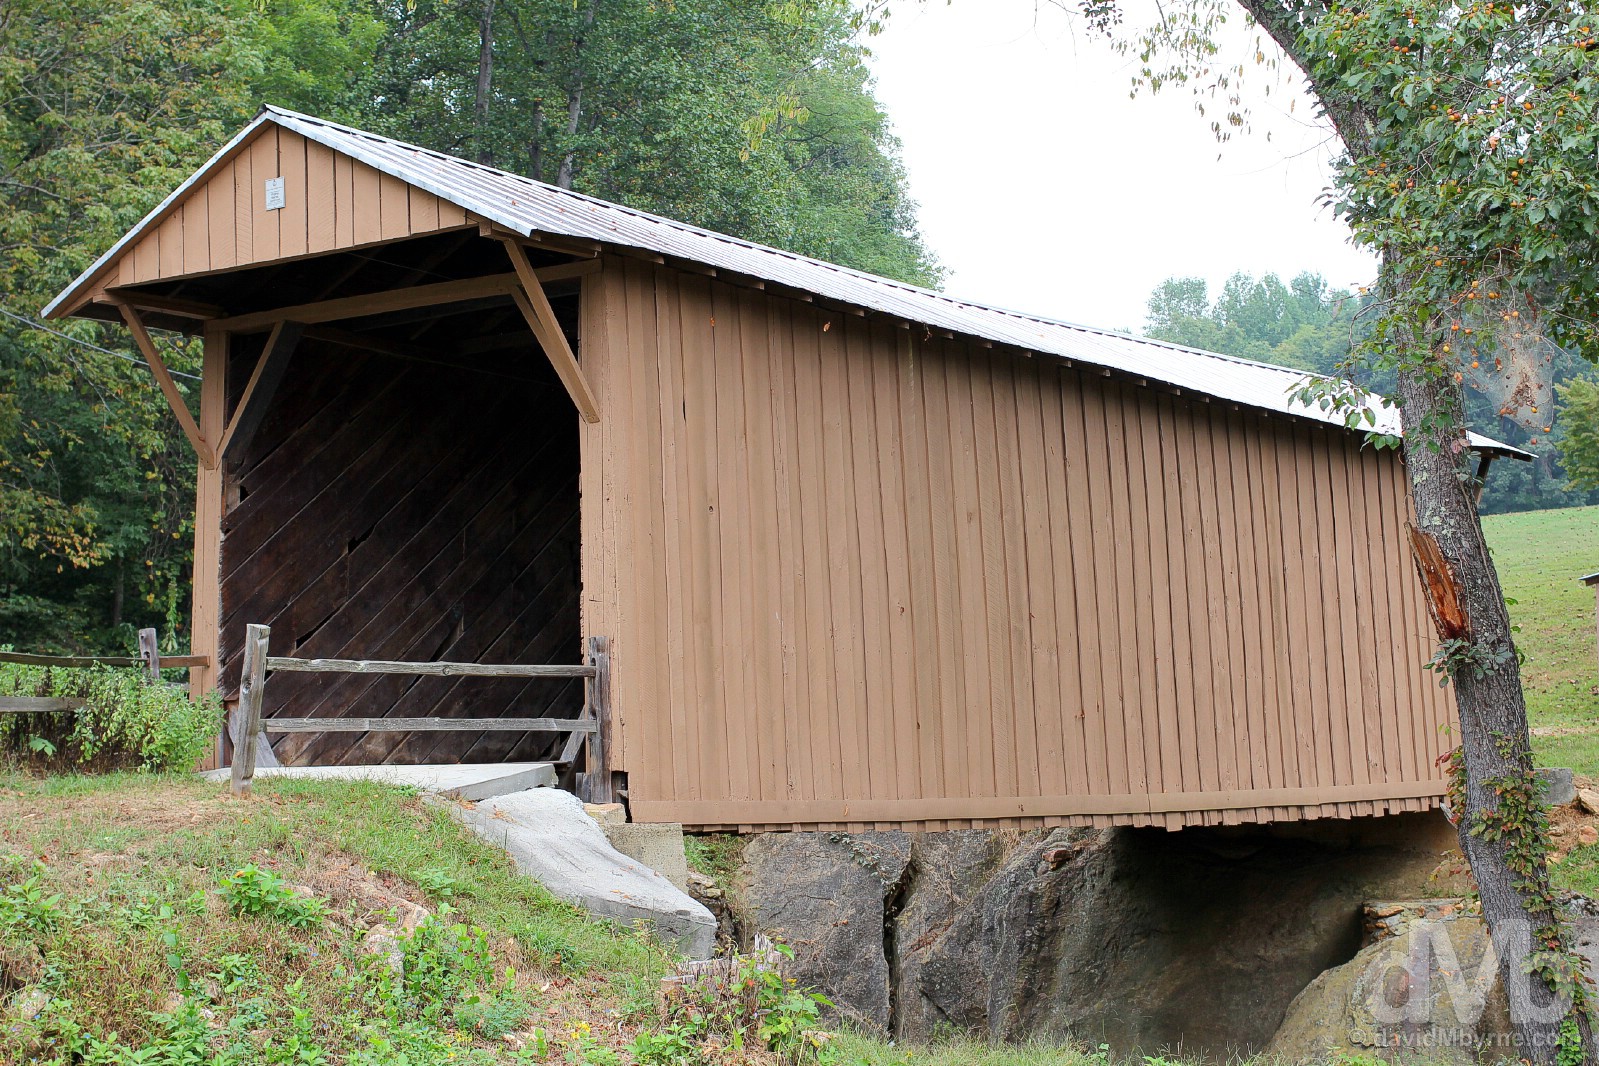 Jacks Creek Covered Bridge, Patrick County, Virginia, USA. September 25, 2016.